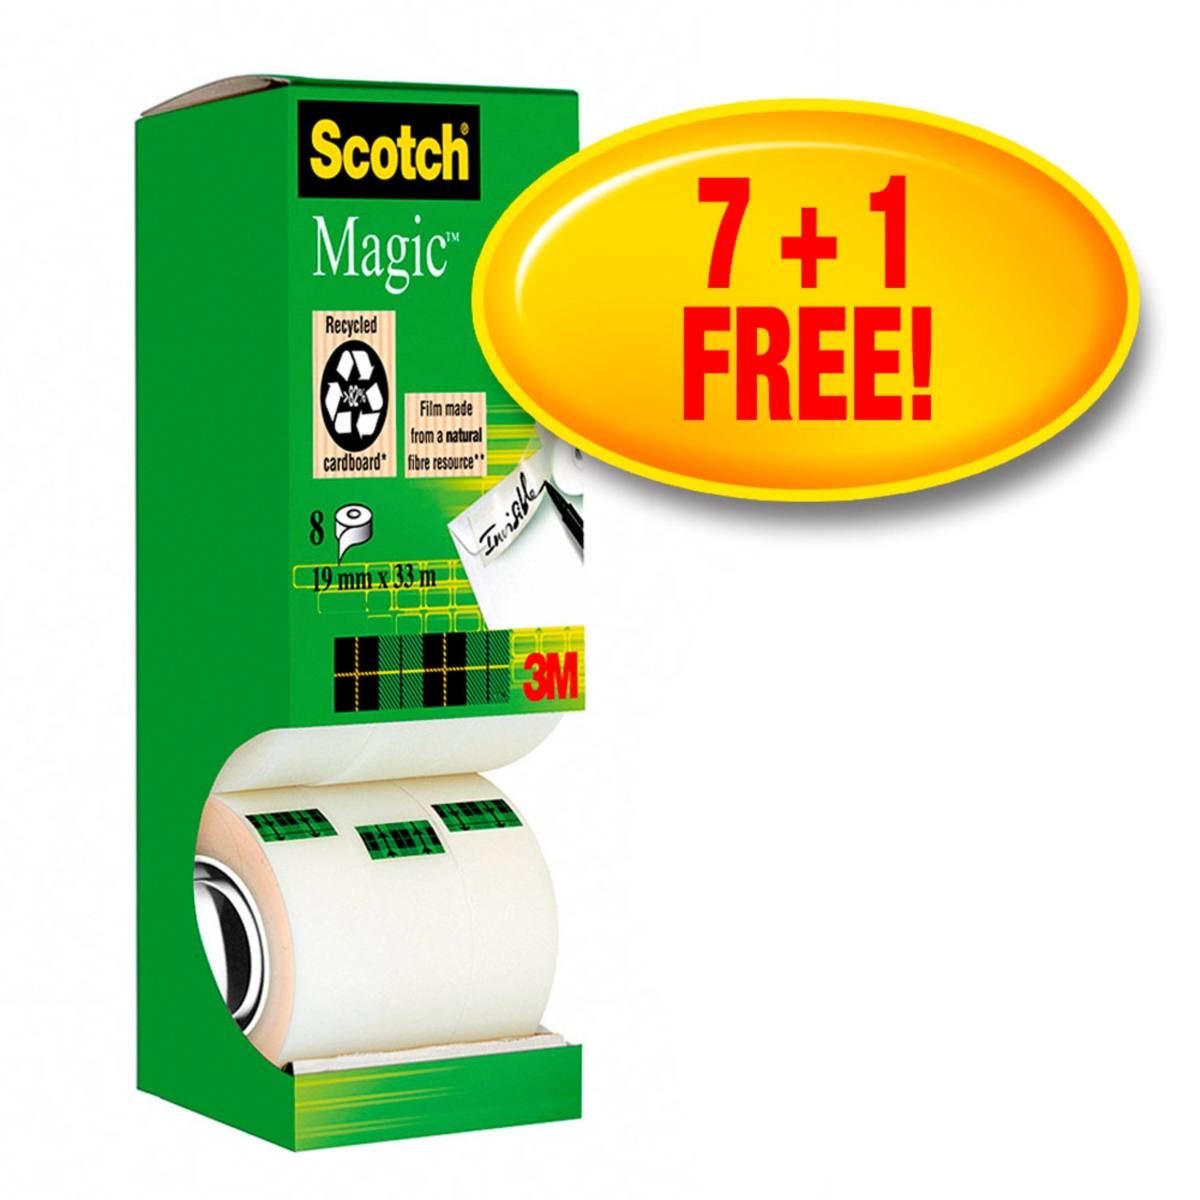 3M Scotch Magic plakband promotie met 8 rollen 19 mm x 33 m